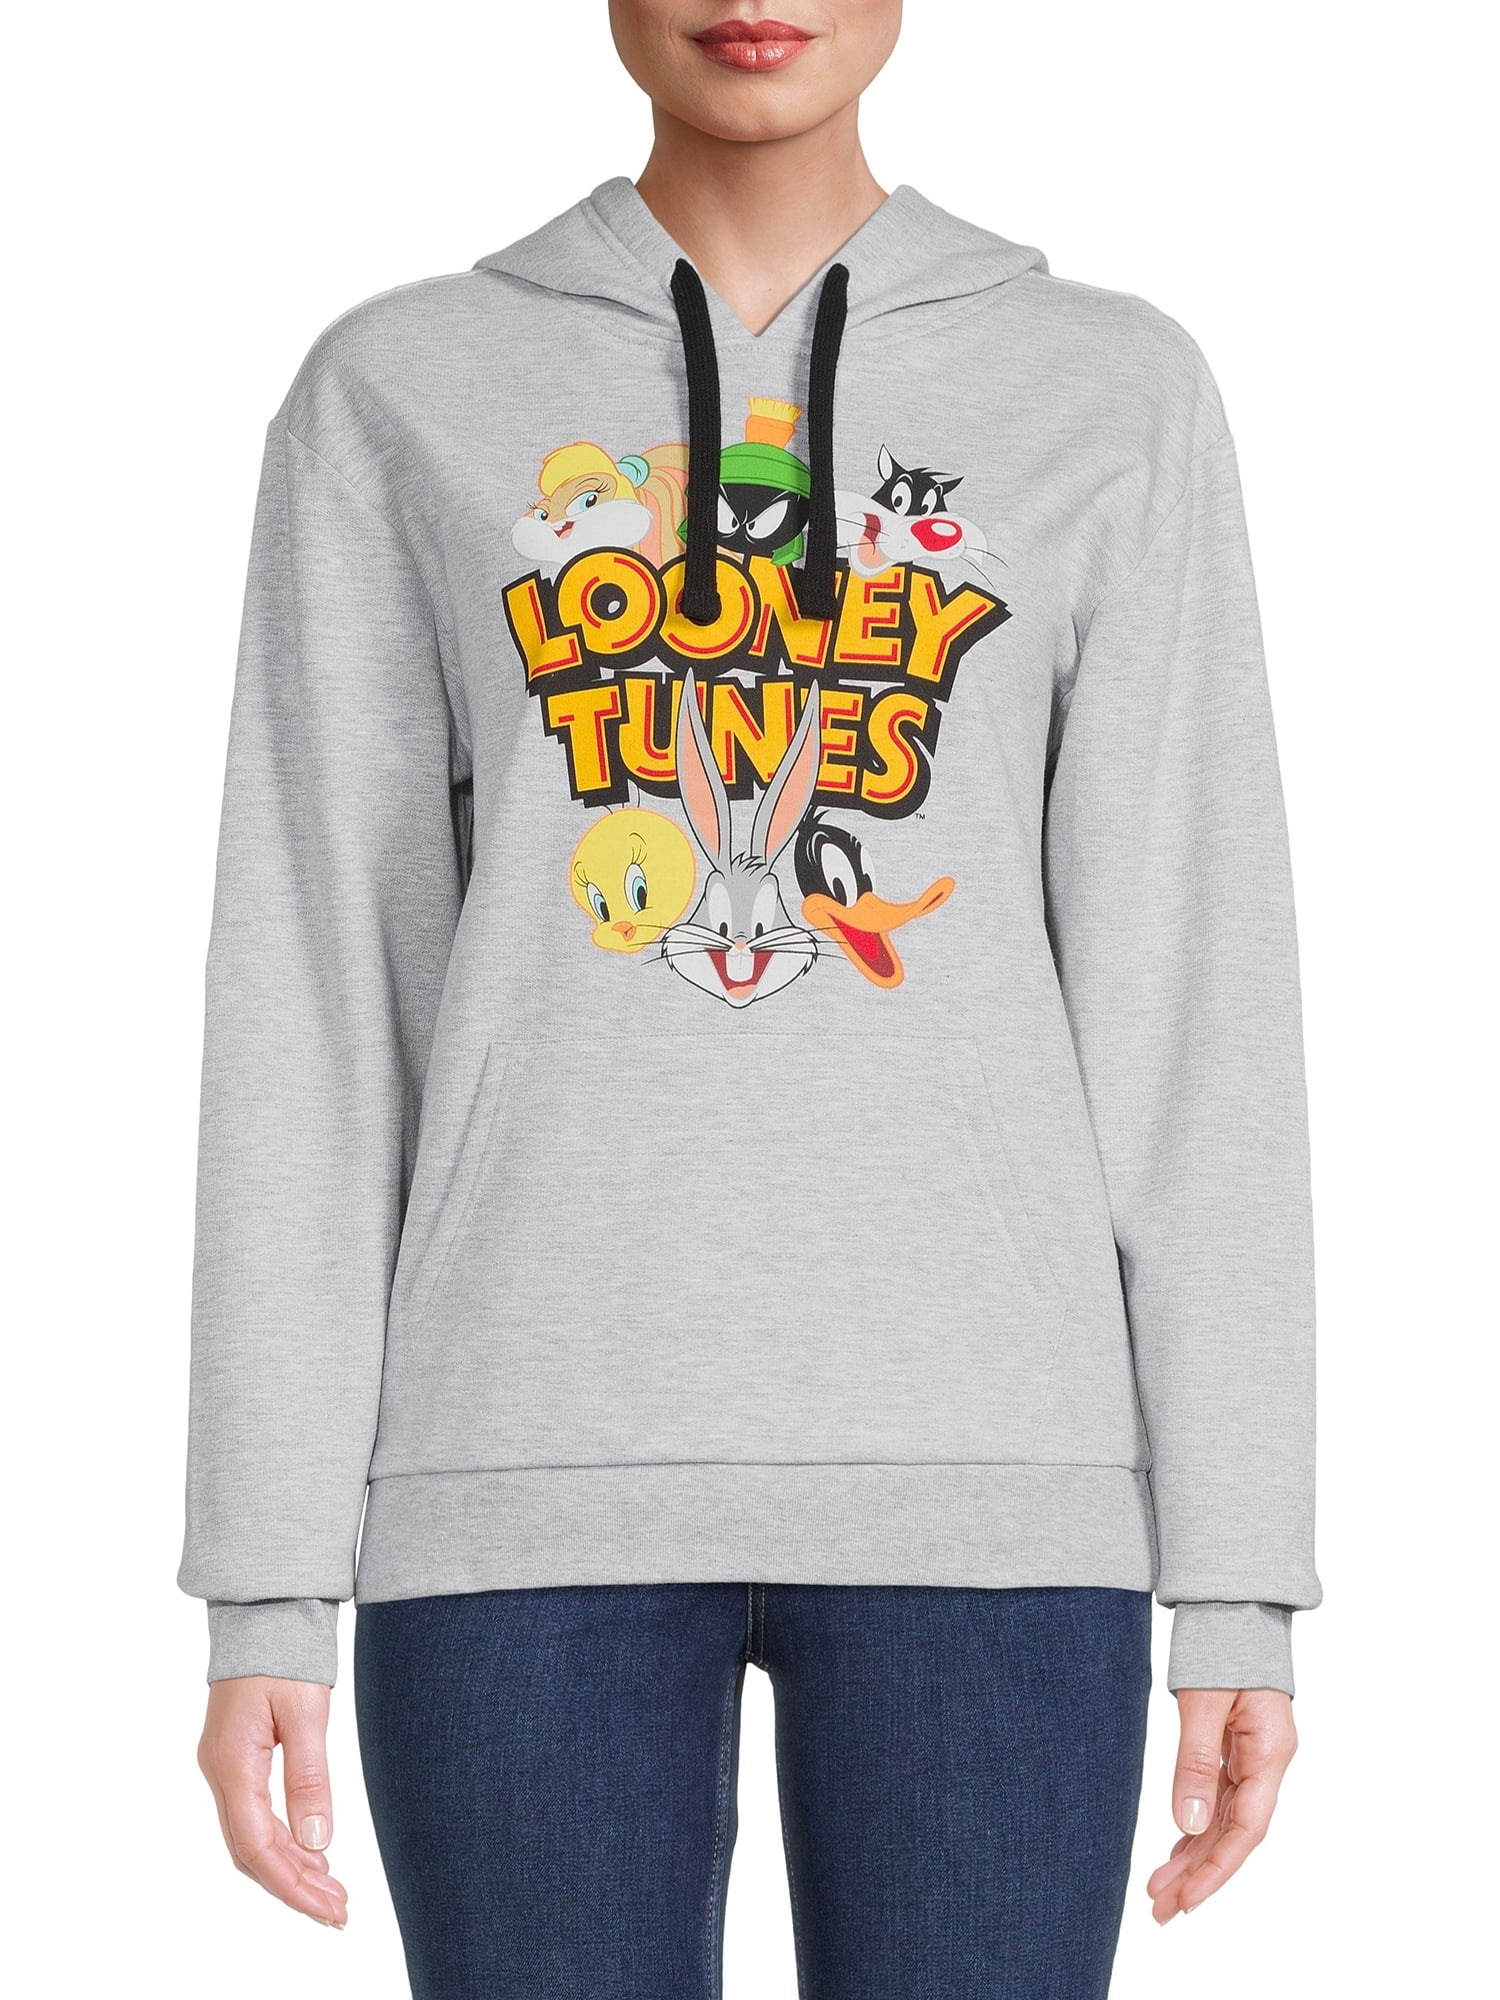 Looney Tunes Print Graphic Hoodie Junior\'s